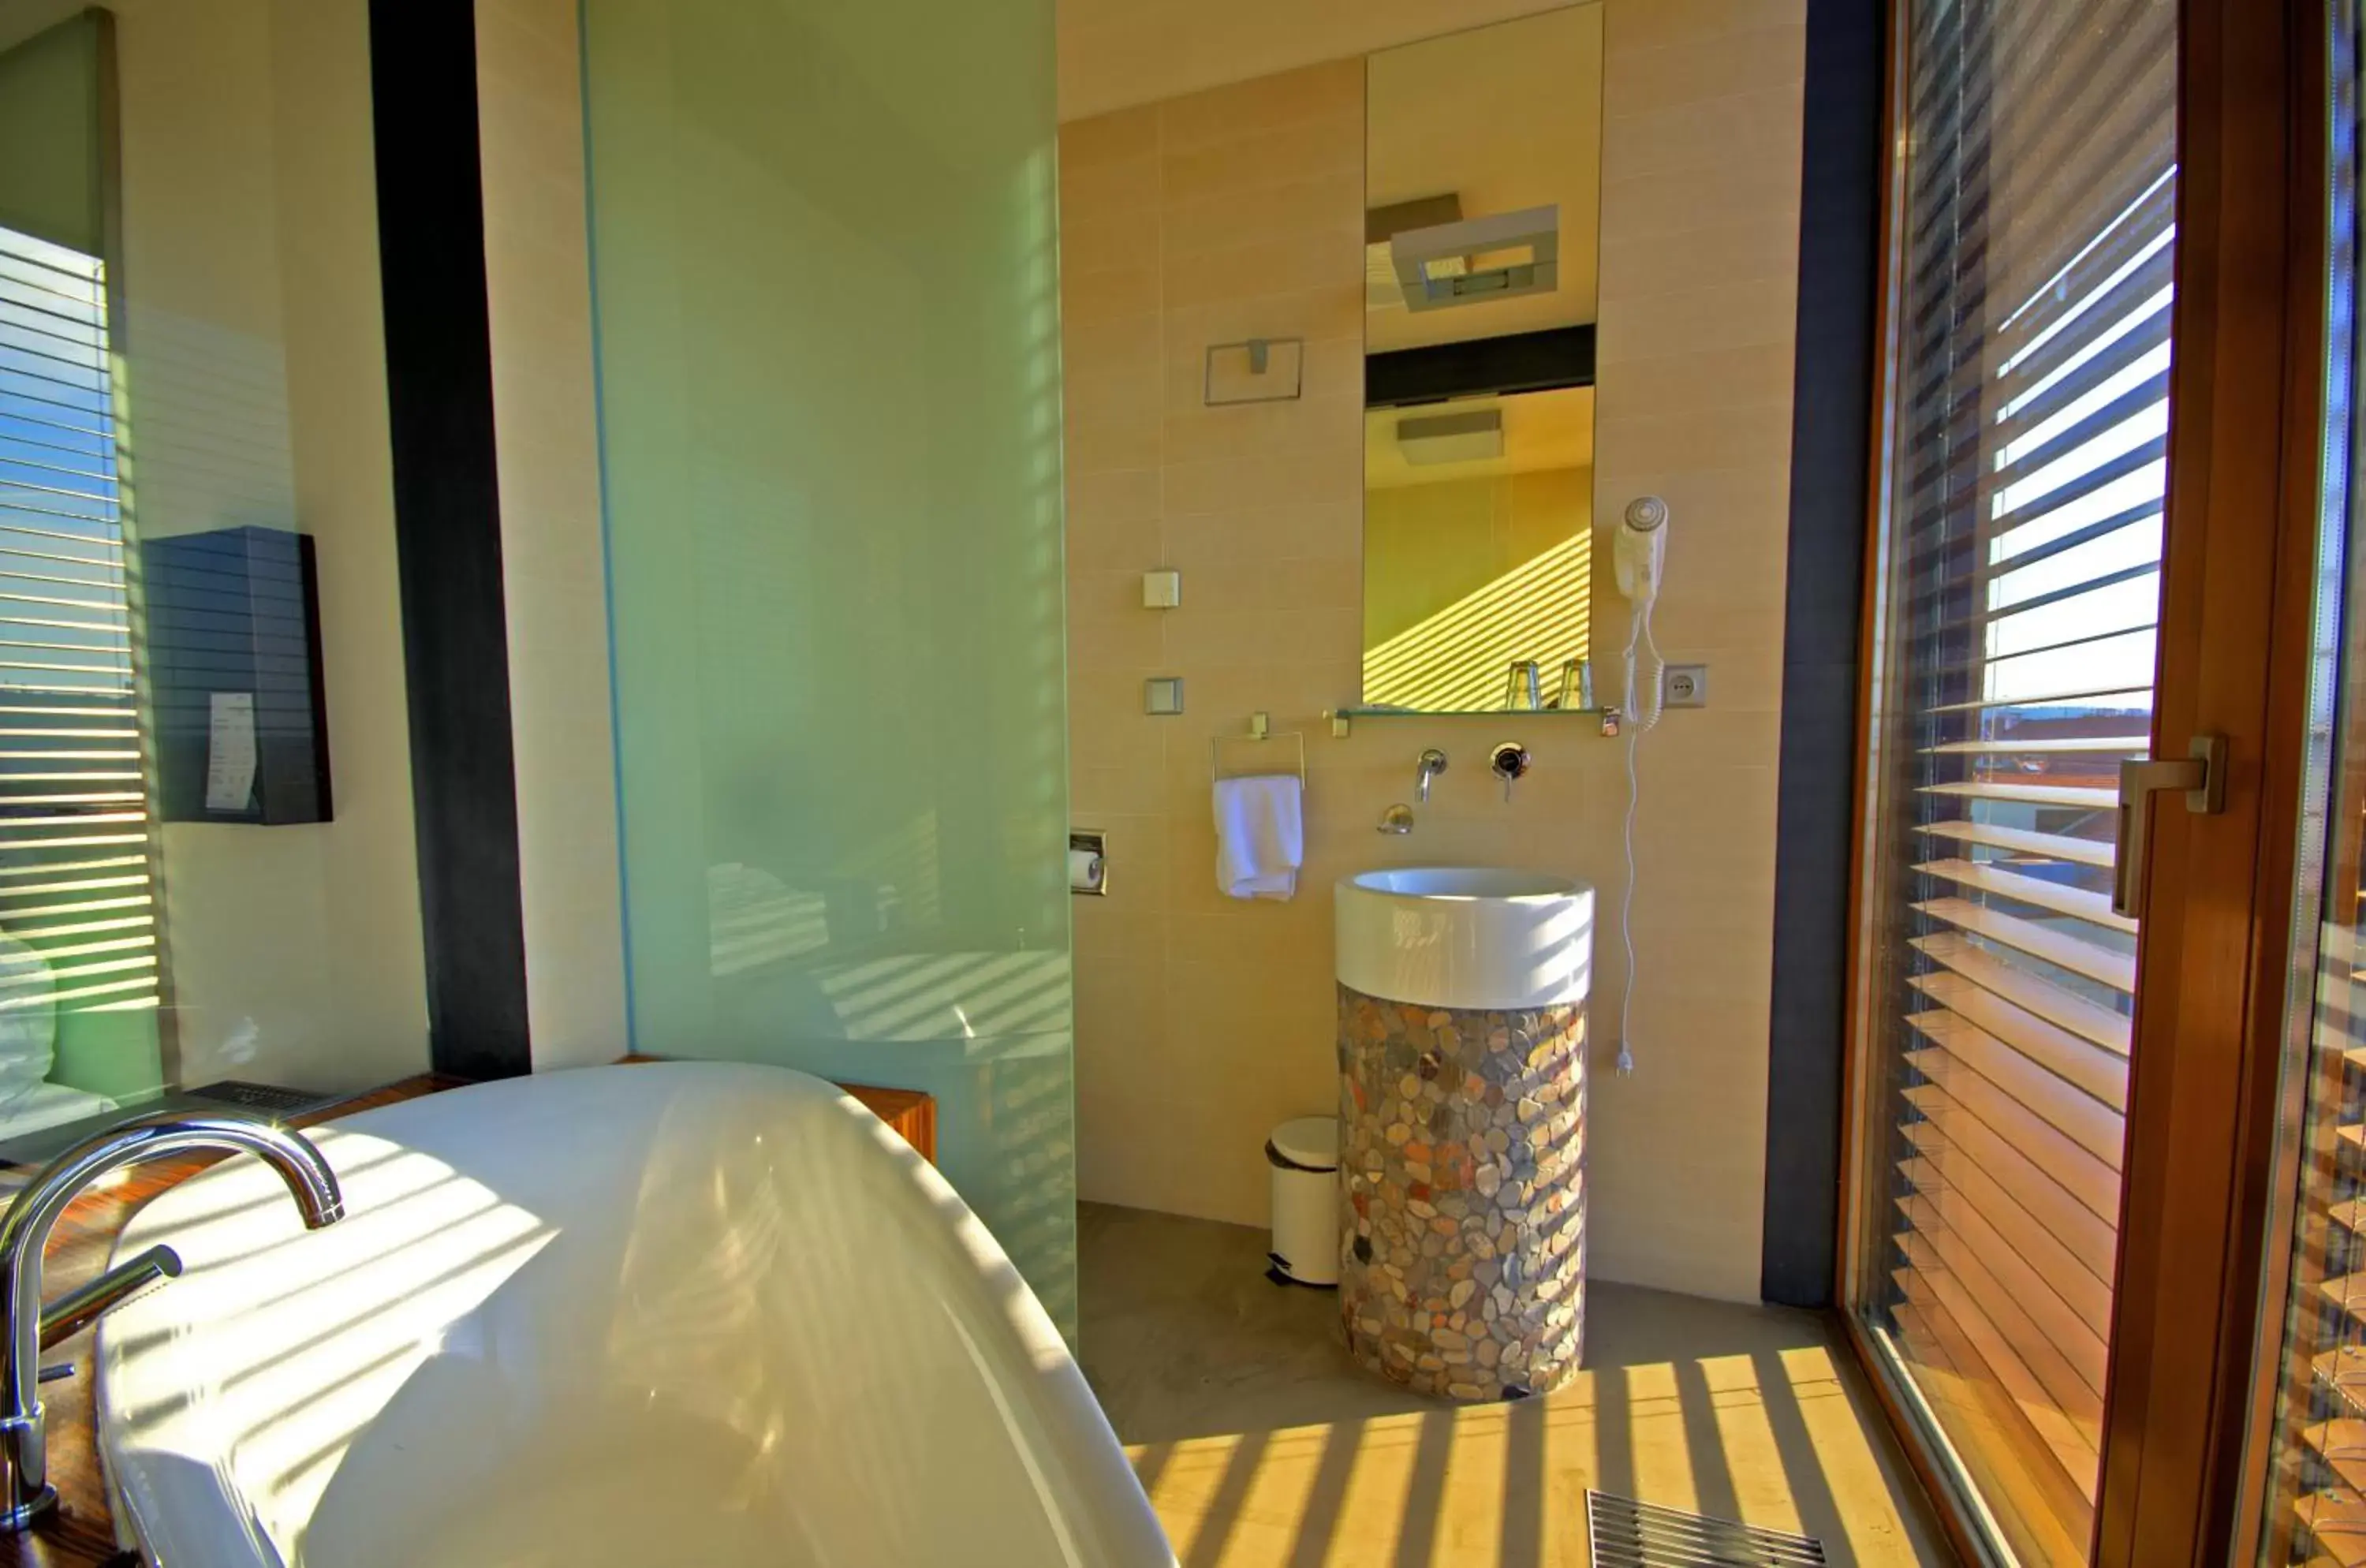 Bathroom in Wenceslas Square Hotel - Czech Leading Hotels